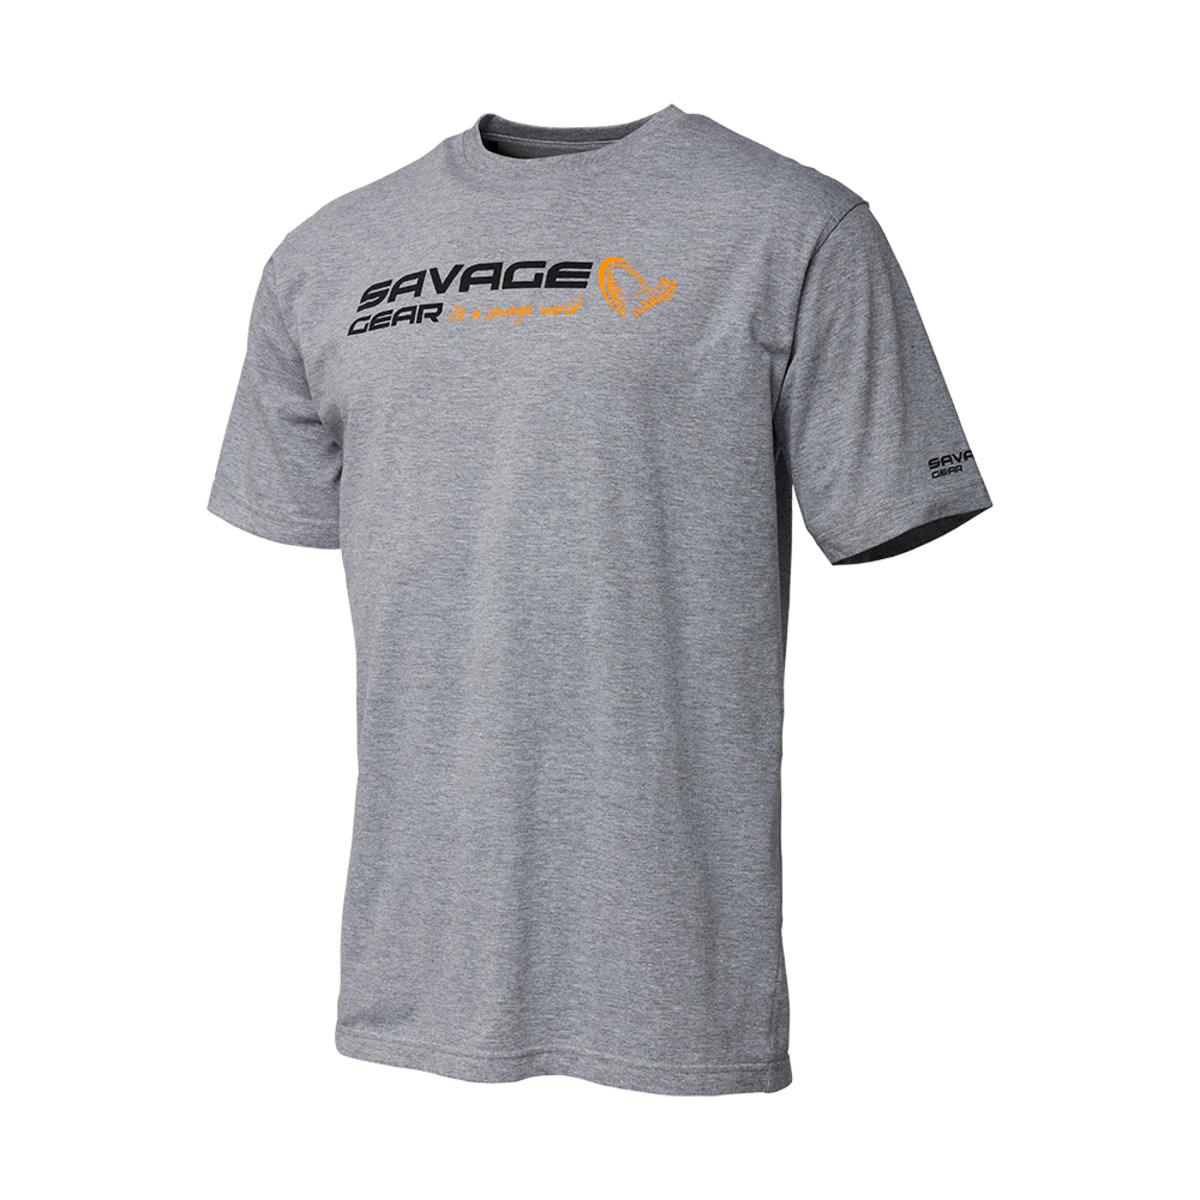 Savage Gear Signature Logo T-shirt - S GREY MELANGE